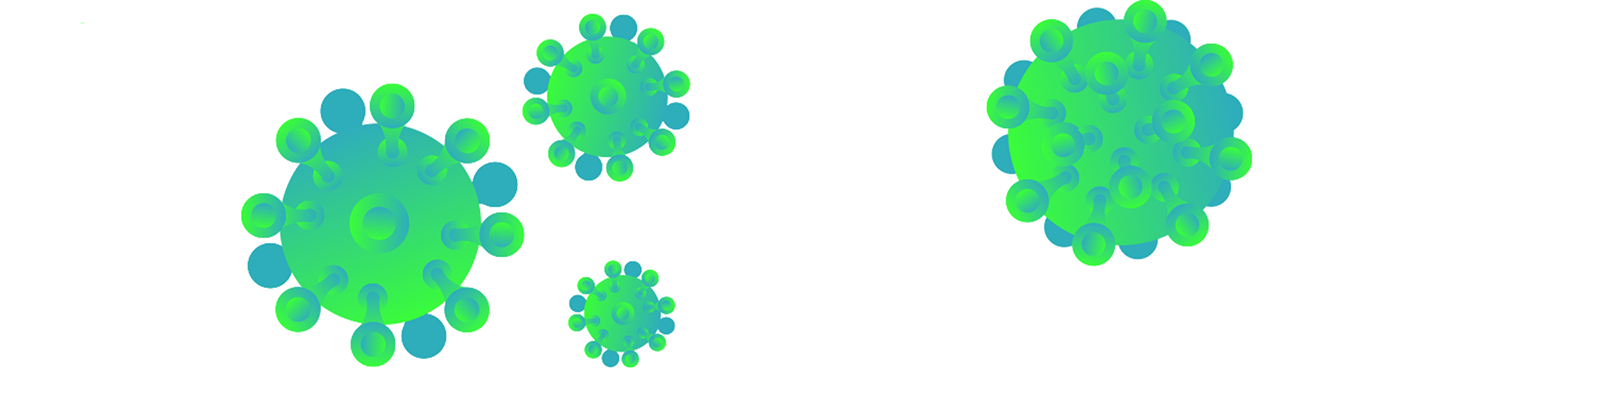 Illsutration of coronavirus